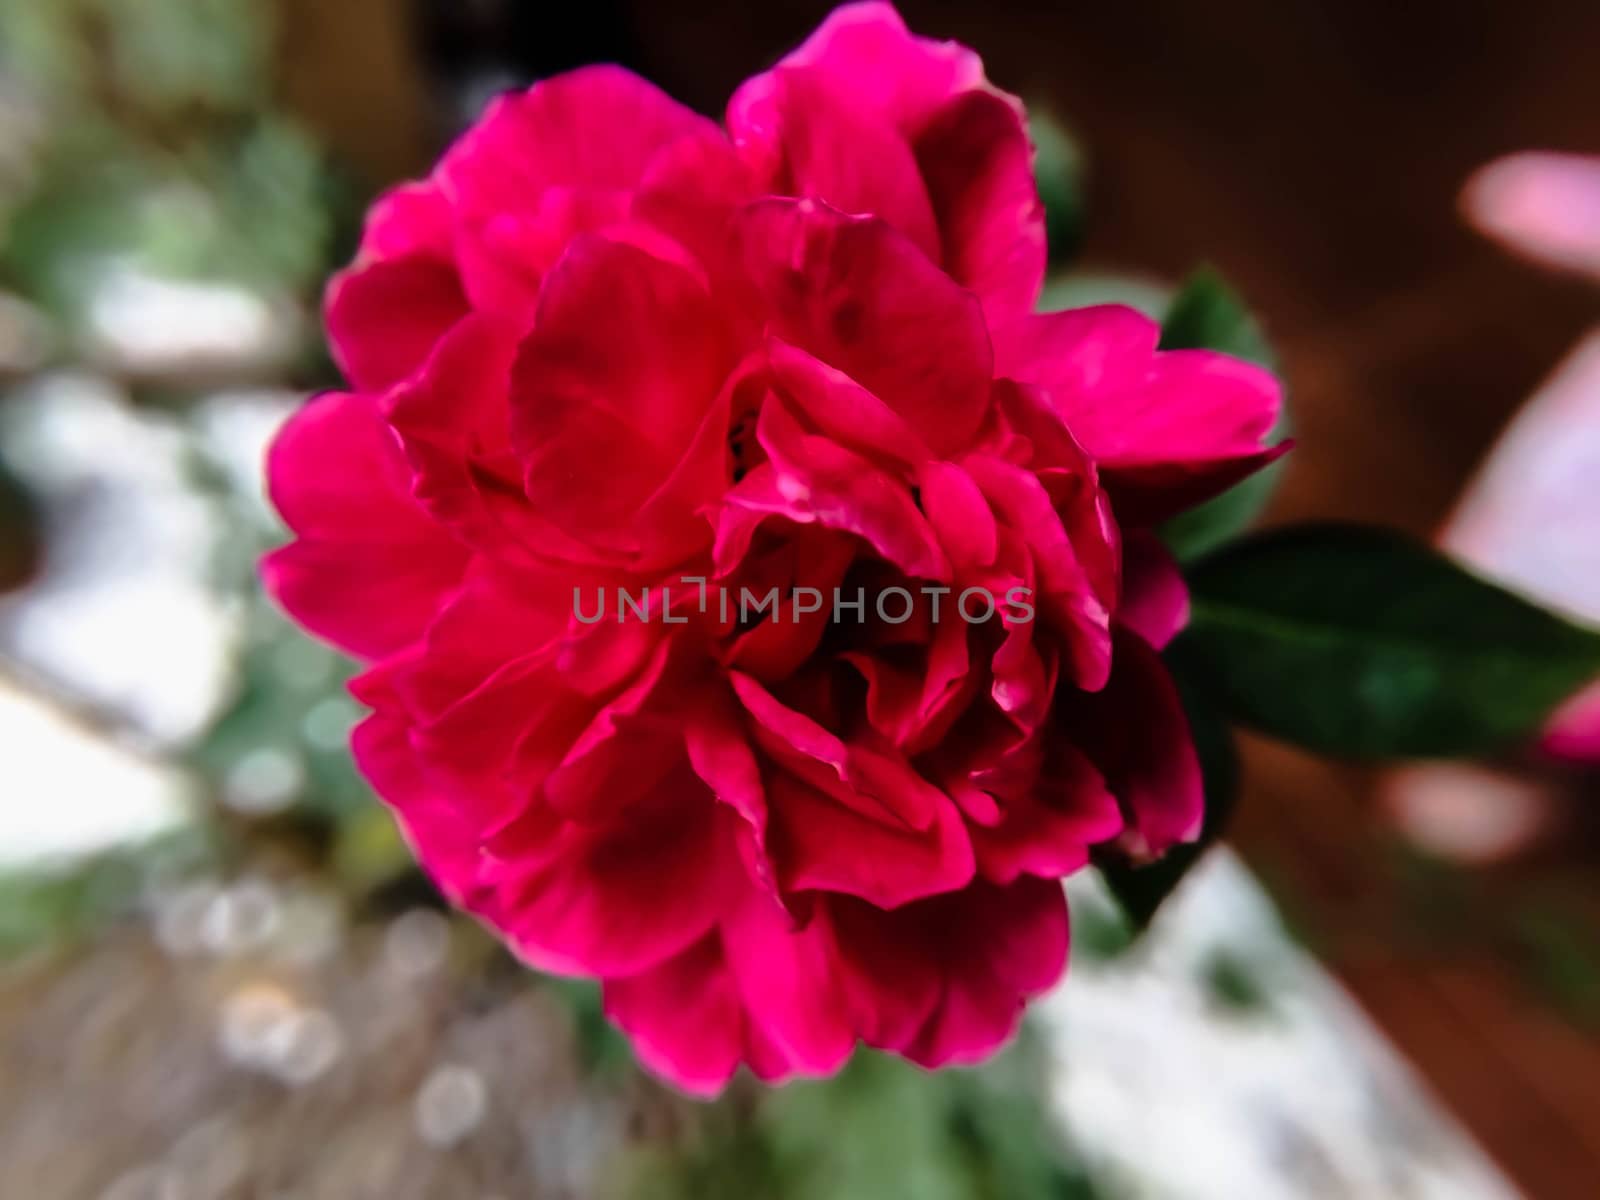 Close pink flower blurry background